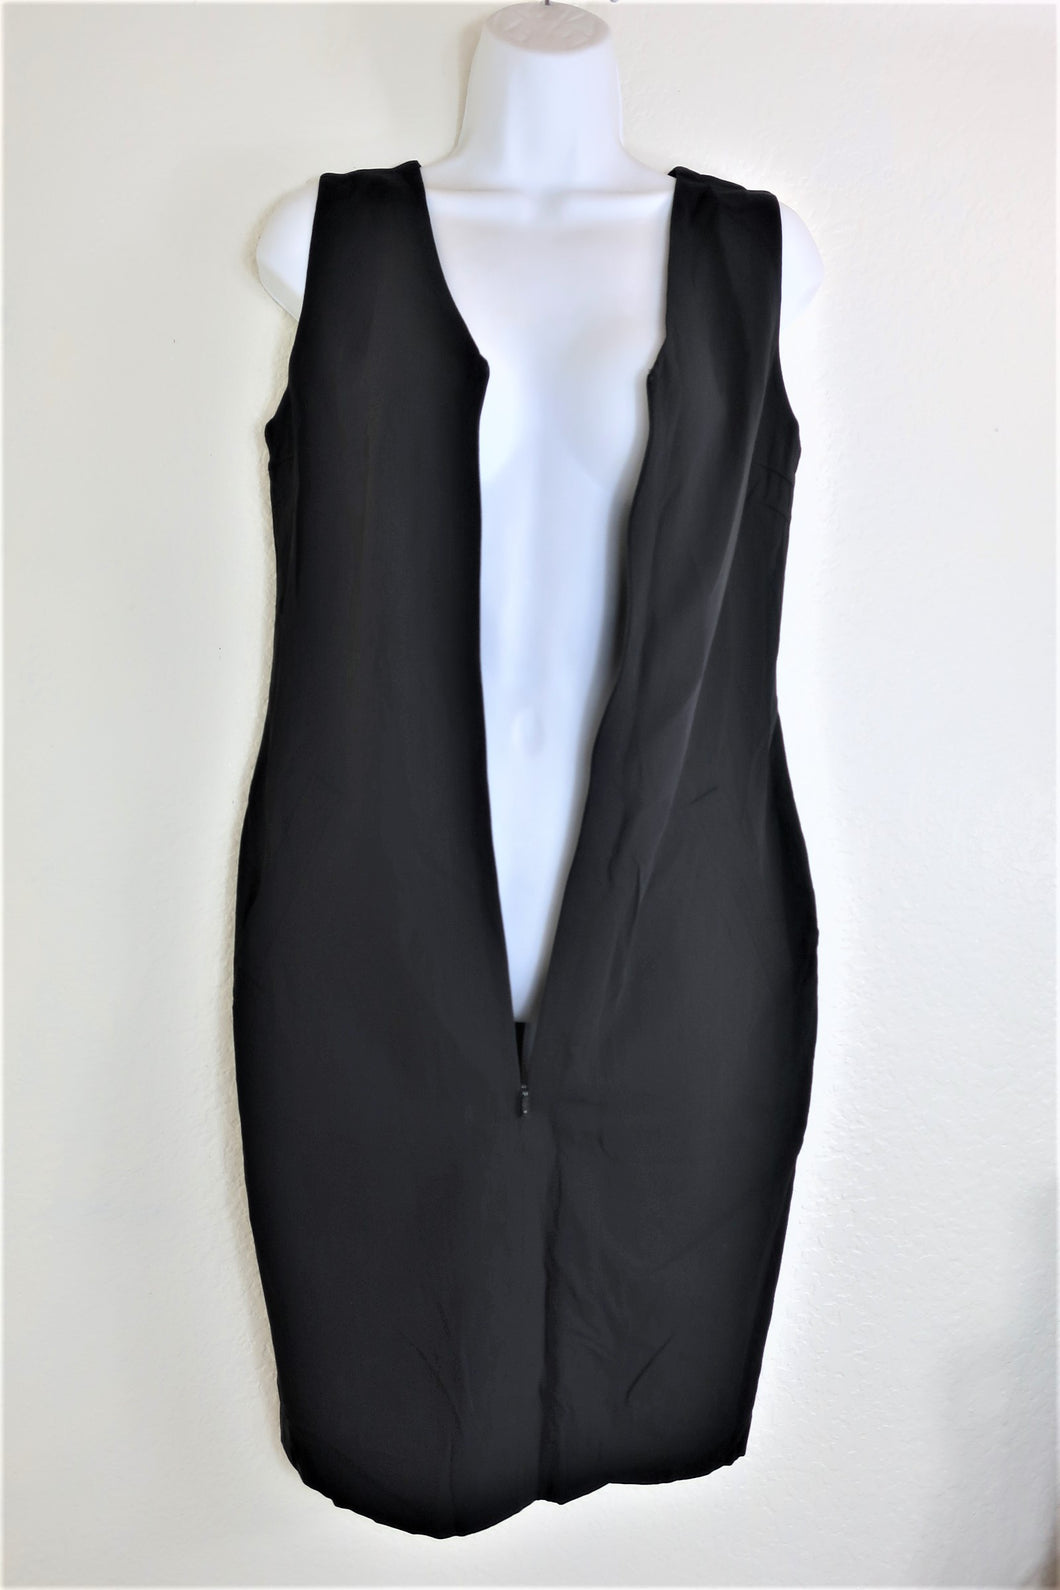 LOEWE Black Sleeveless ZIp Front Dress LBD Cocktail Dress Small 40 6 7 8